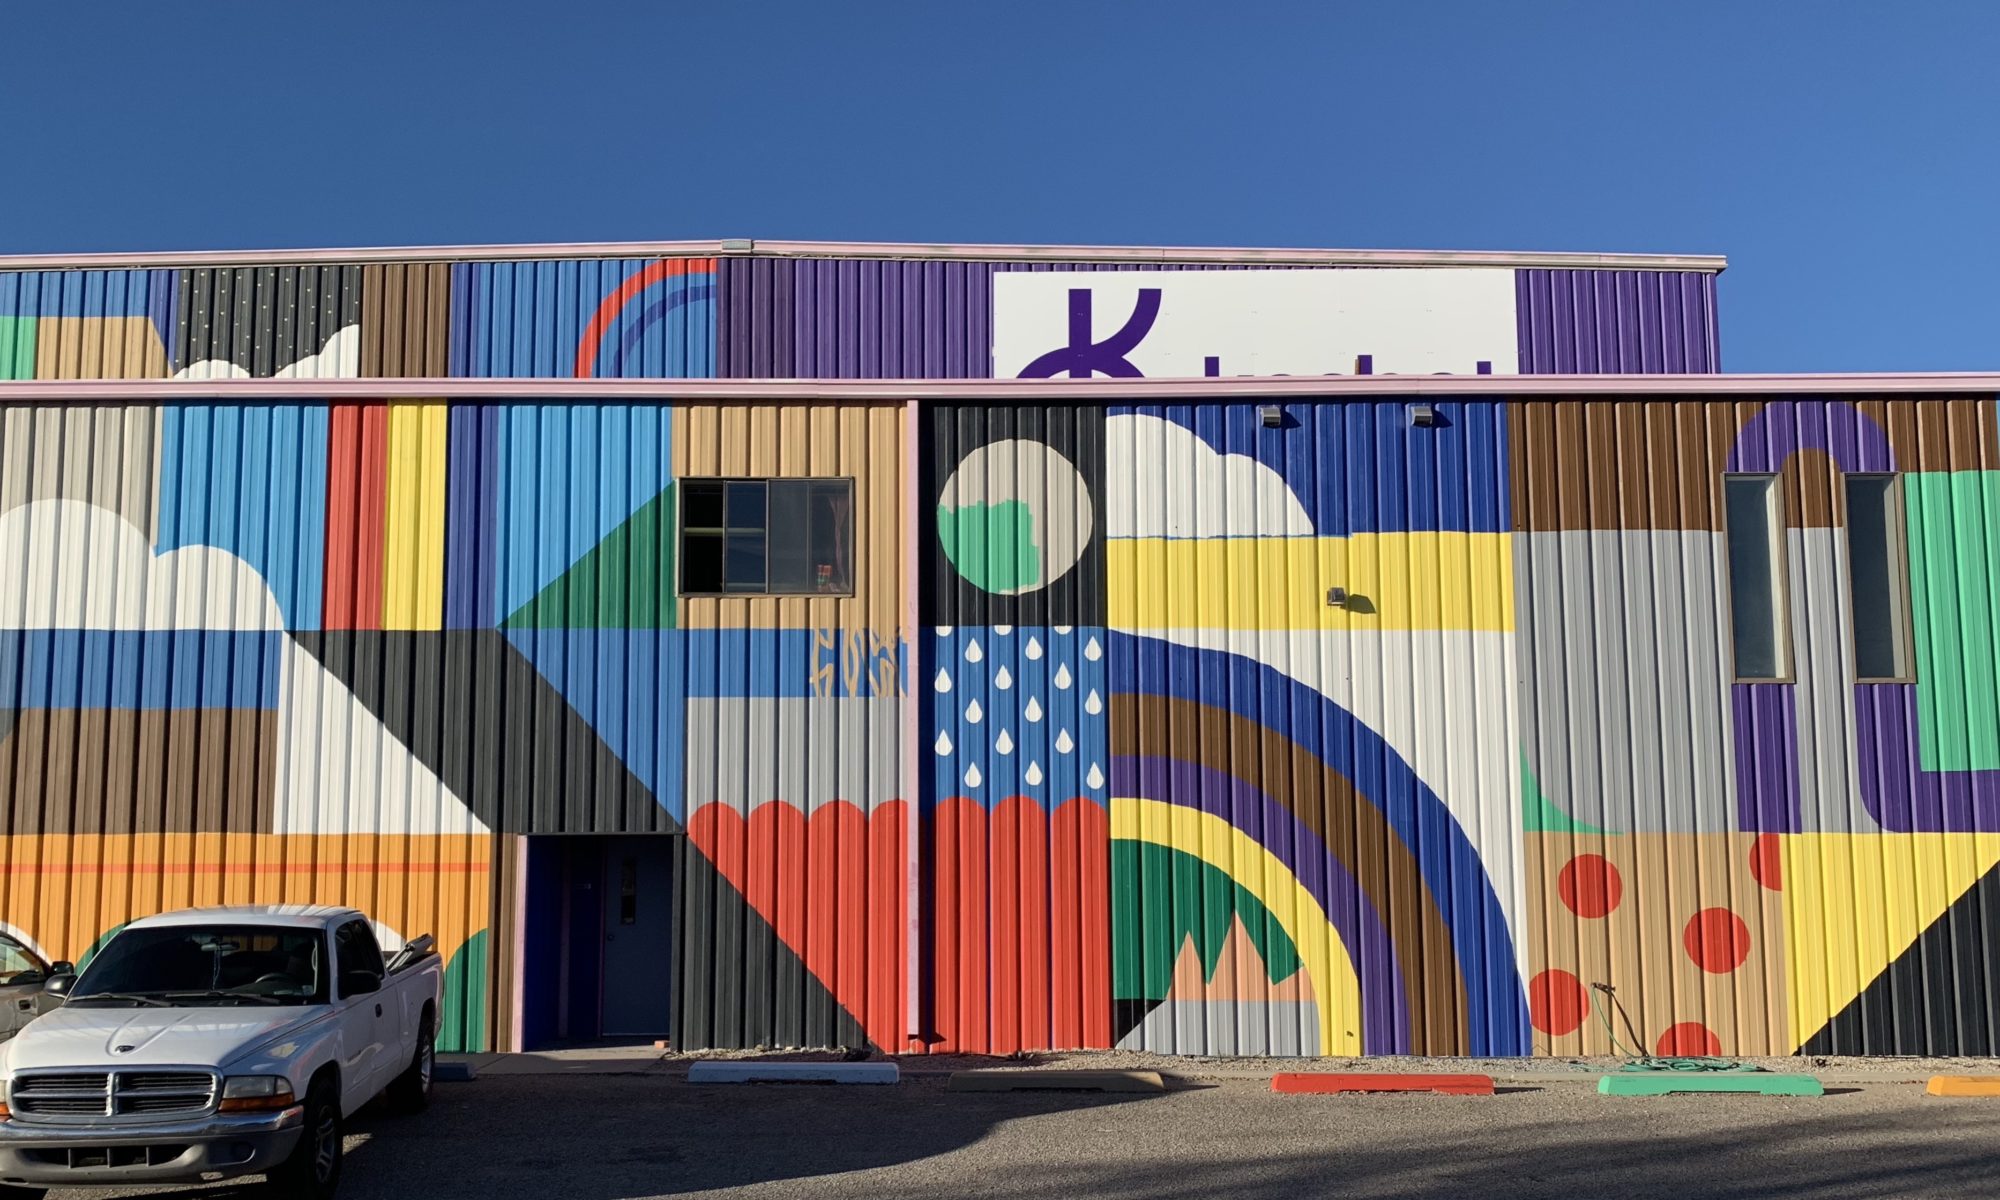 mural of elementary style blocks